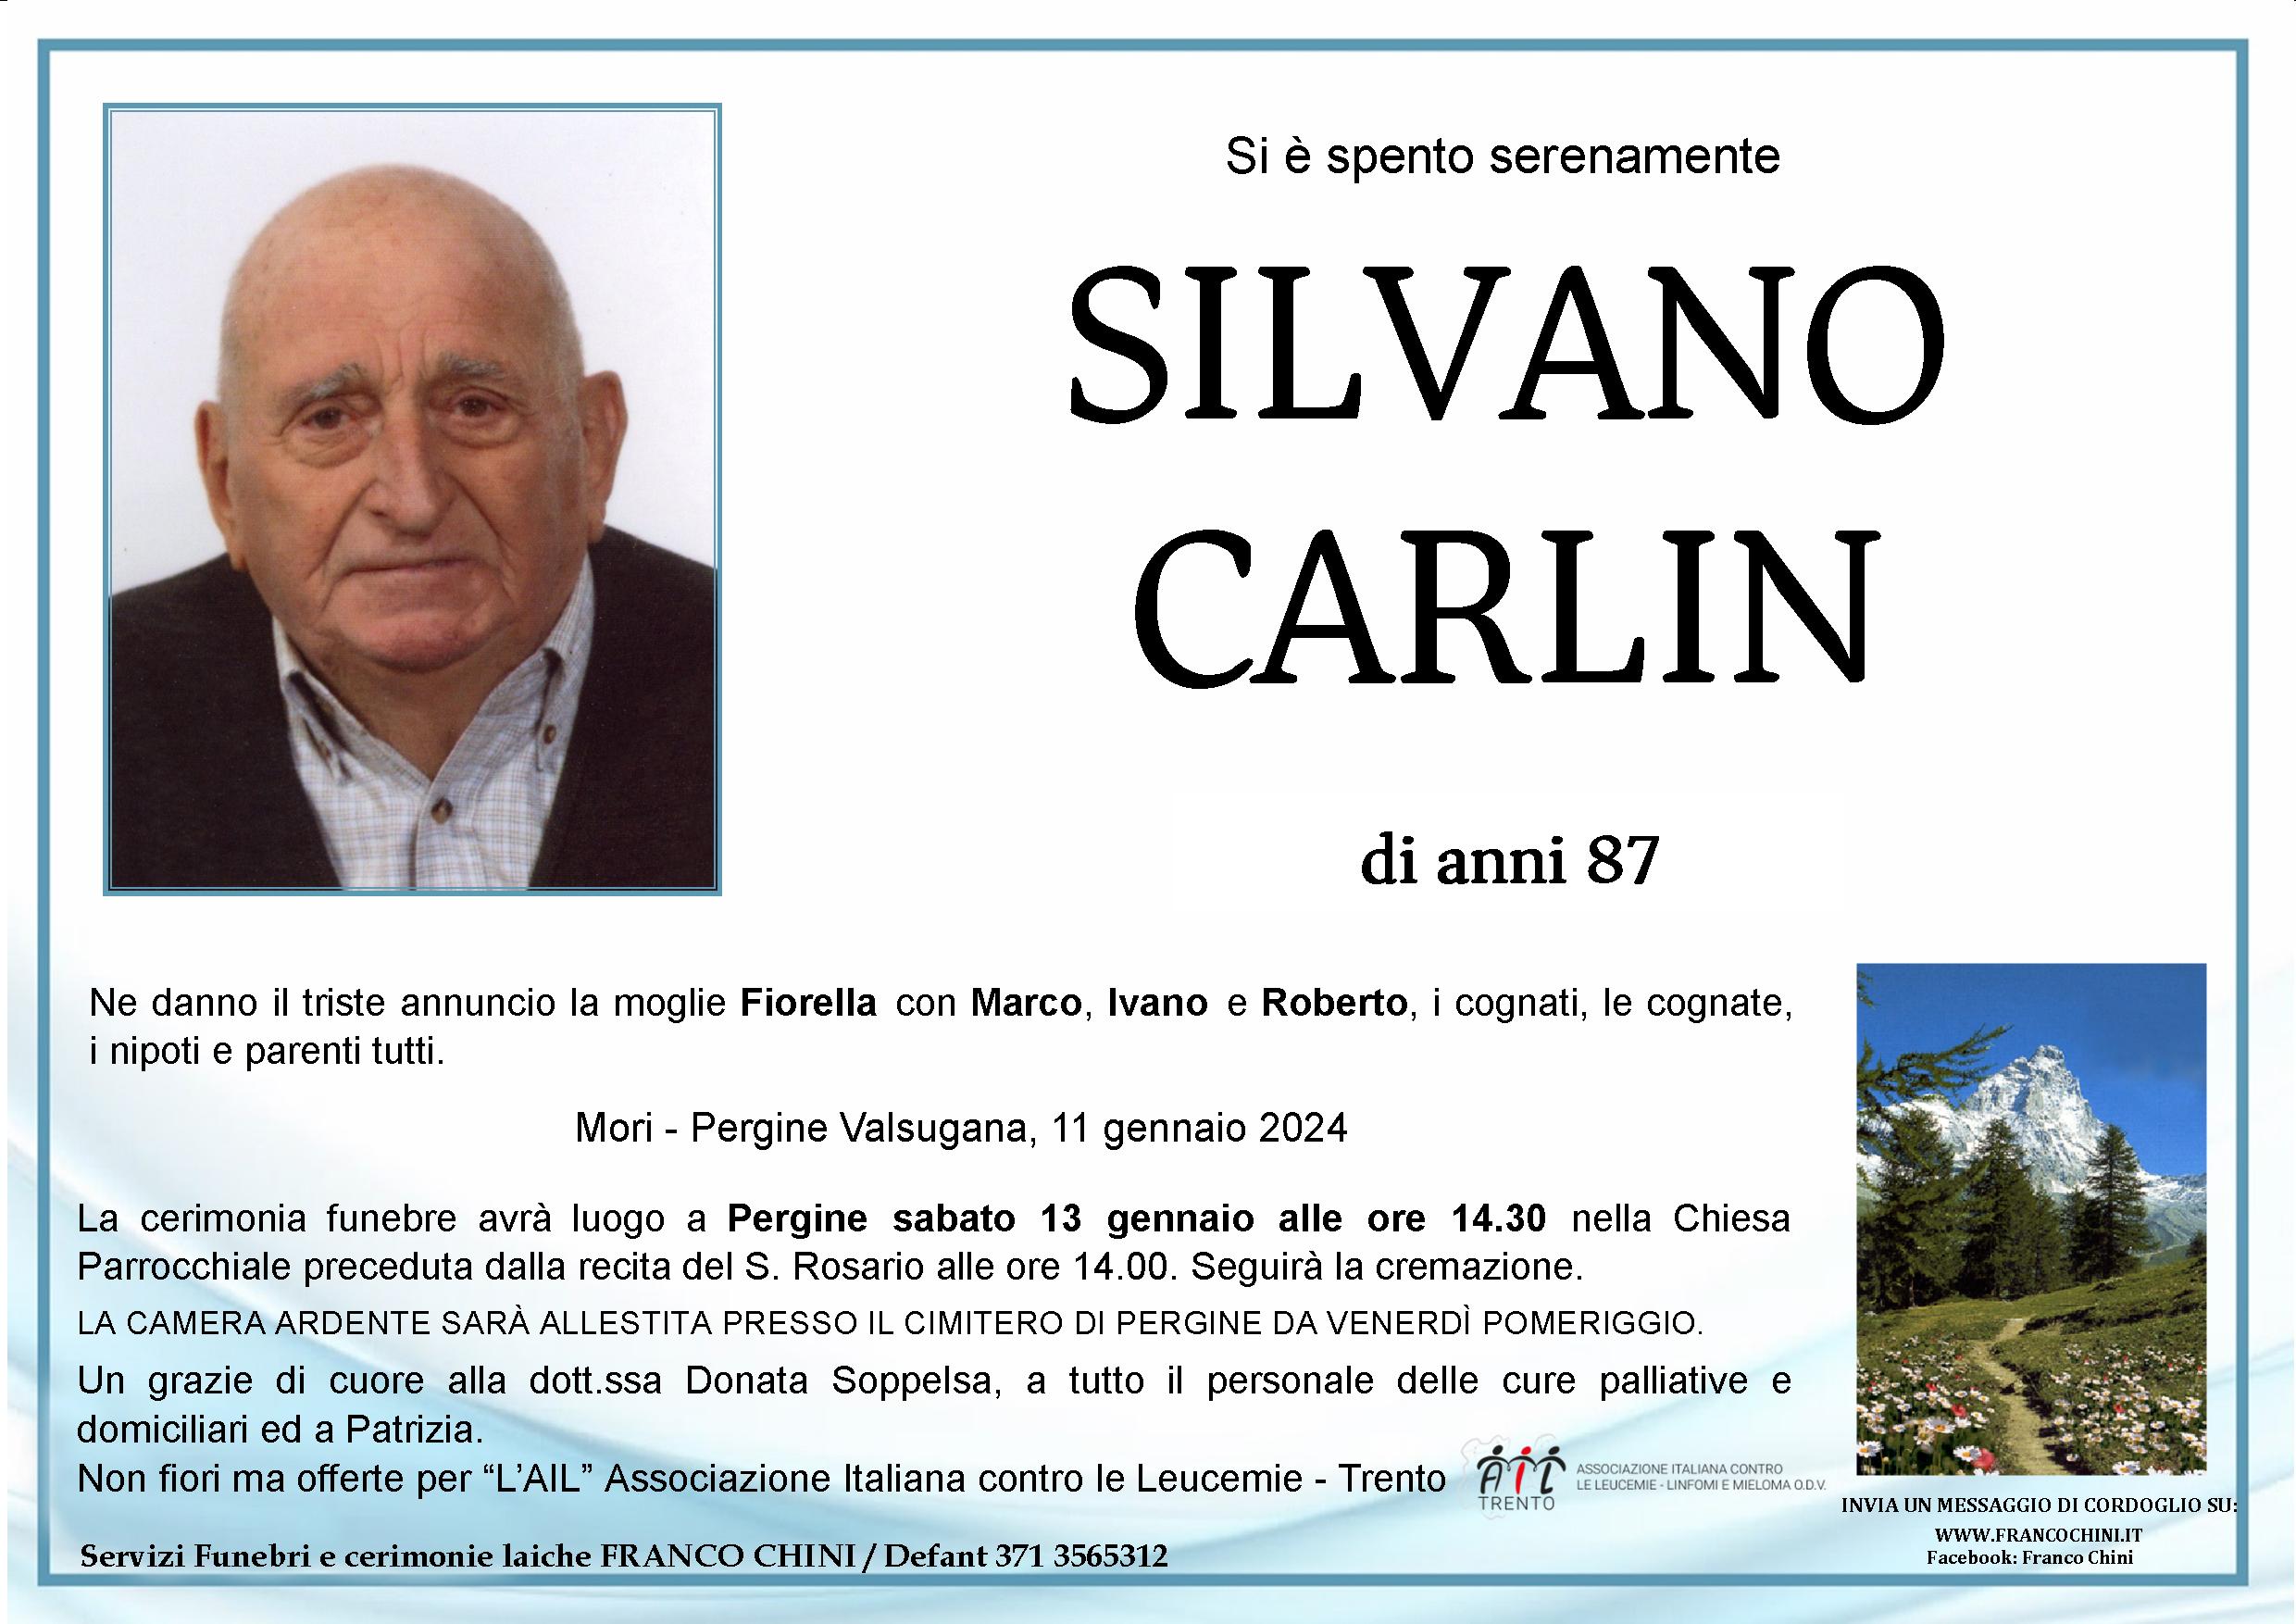 Silvano Carlin